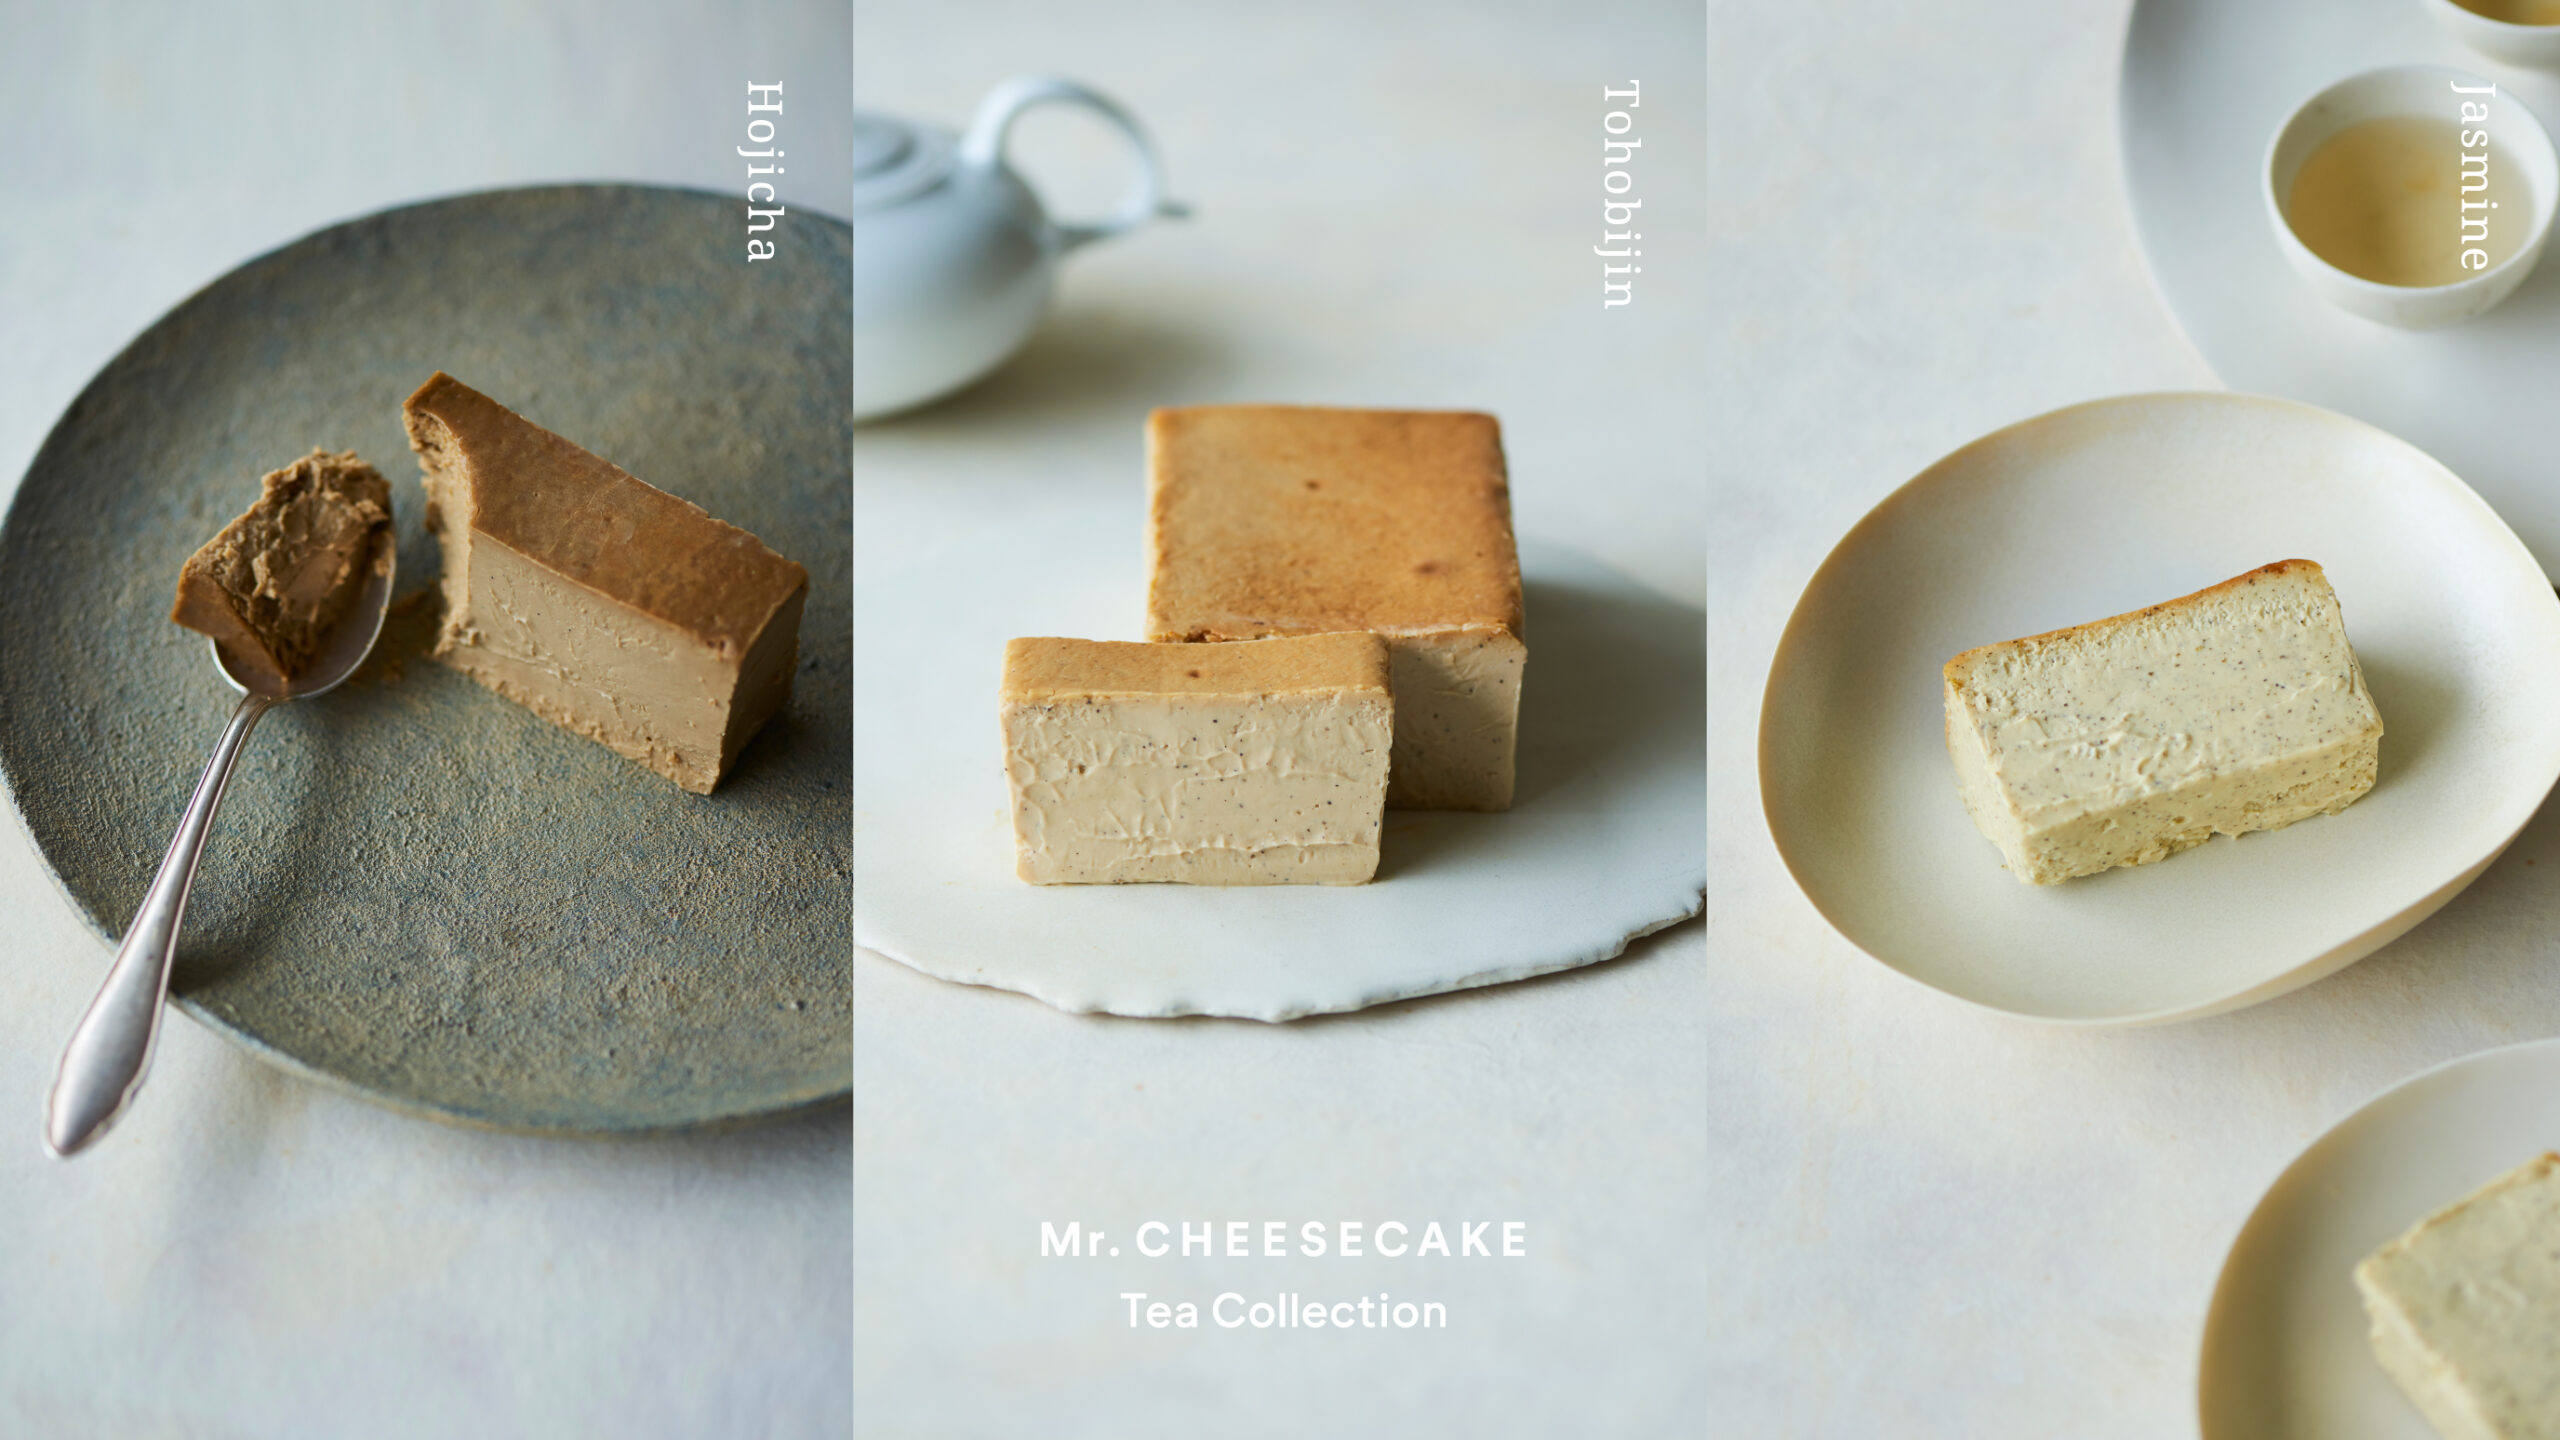 「Mr. CHEESECAKE」は10月30日より、「Mr. CHEESECAKE Tea Collection」として3種のお茶を使ったフレーバー「Mr. CHEESECAKE Hojicha」、「Mr. CHEESECAKE Tohobijin」、「Mr. CHEESECAKE Jasmine」を新販売する。